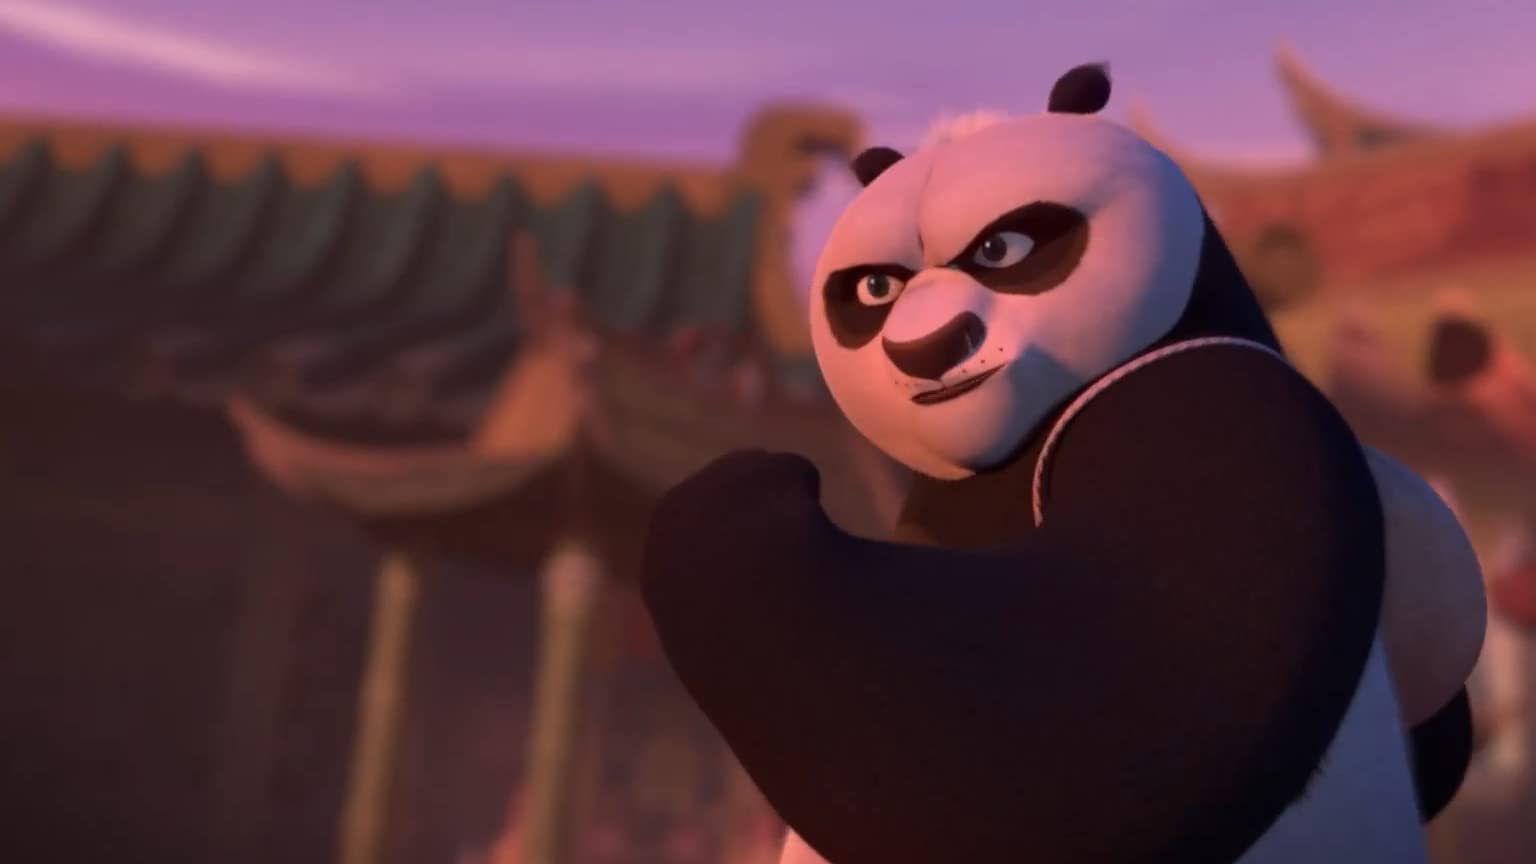 Kung Fu Panda: Der Drachenritter